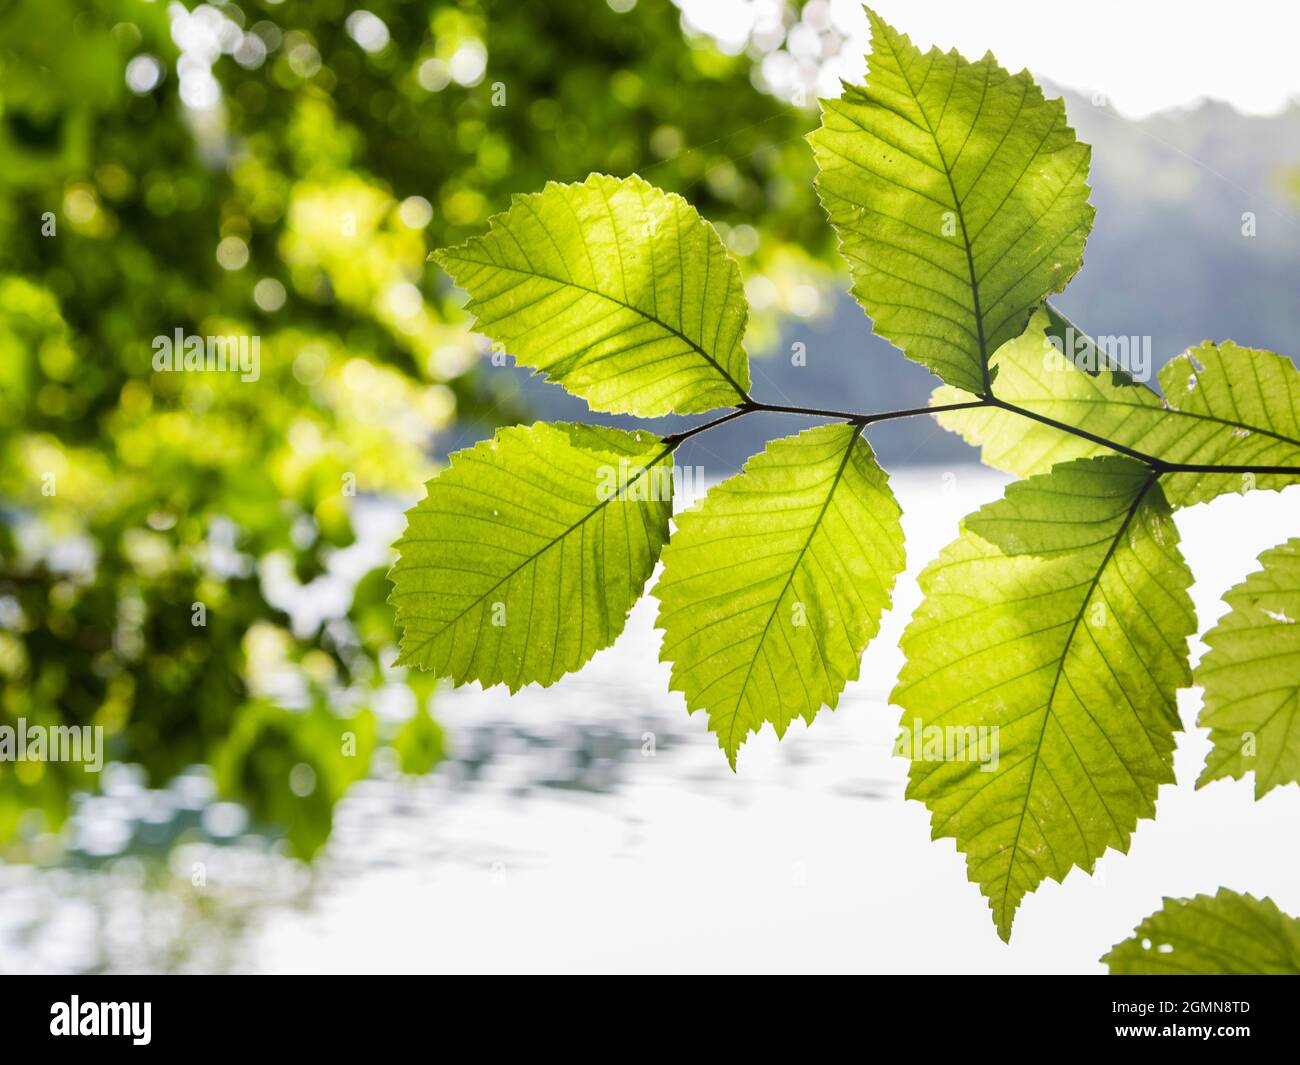 European elm, European White Elm, Fluttering Elm, Spreading Elm, Russian Elm (Ulmus laevis, Ulmus effusa), leaves in backlight with lake in the Stock Photo